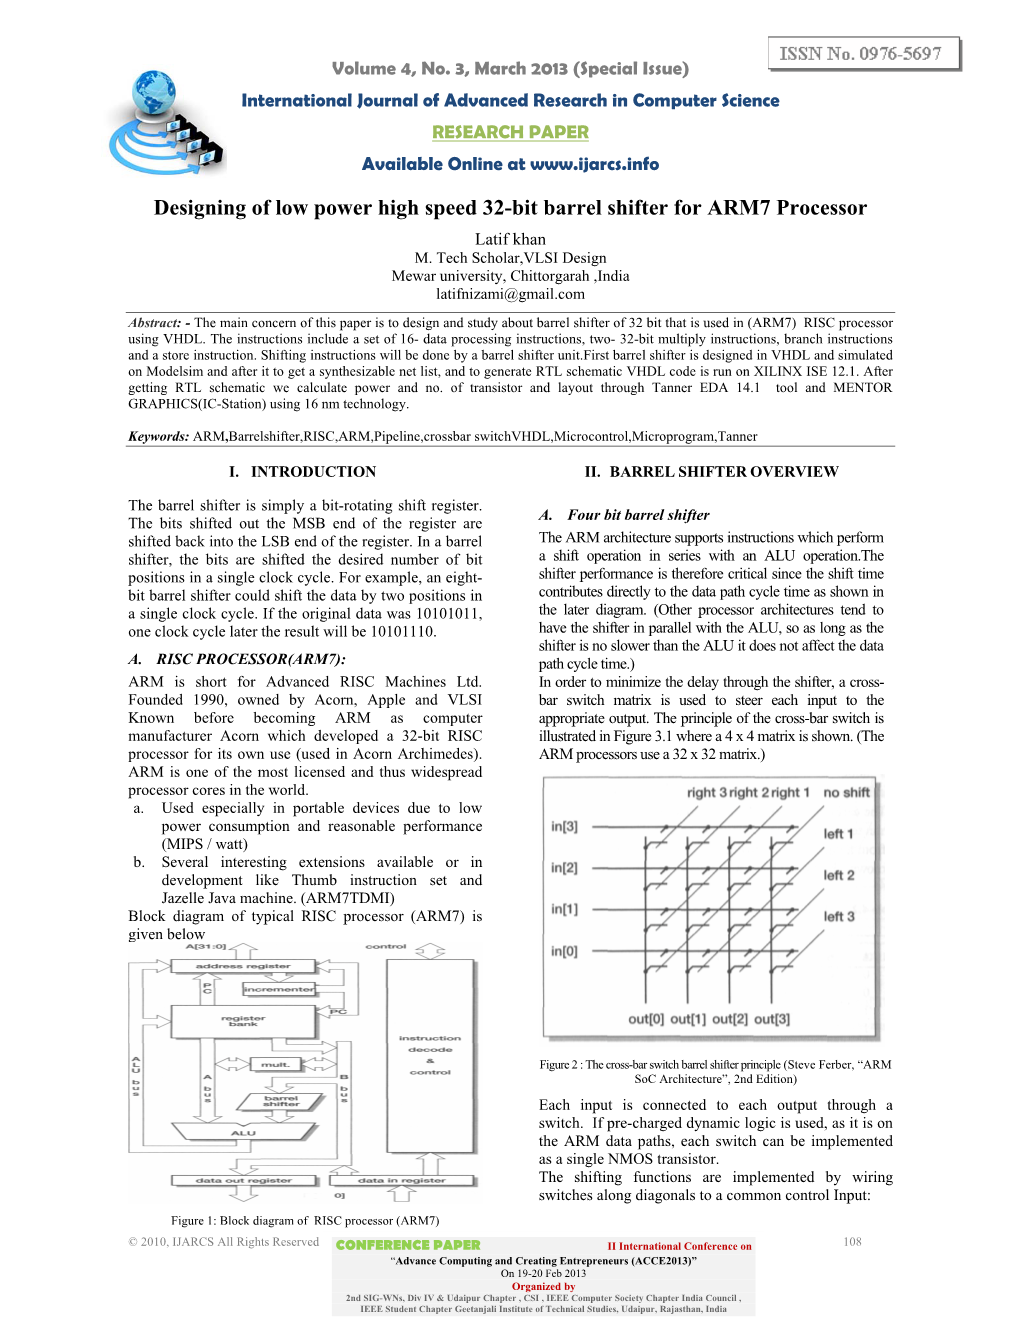 Designing of Low Power High Speed 32-Bit Barrel Shifter for ARM7 Processor Latif Khan M